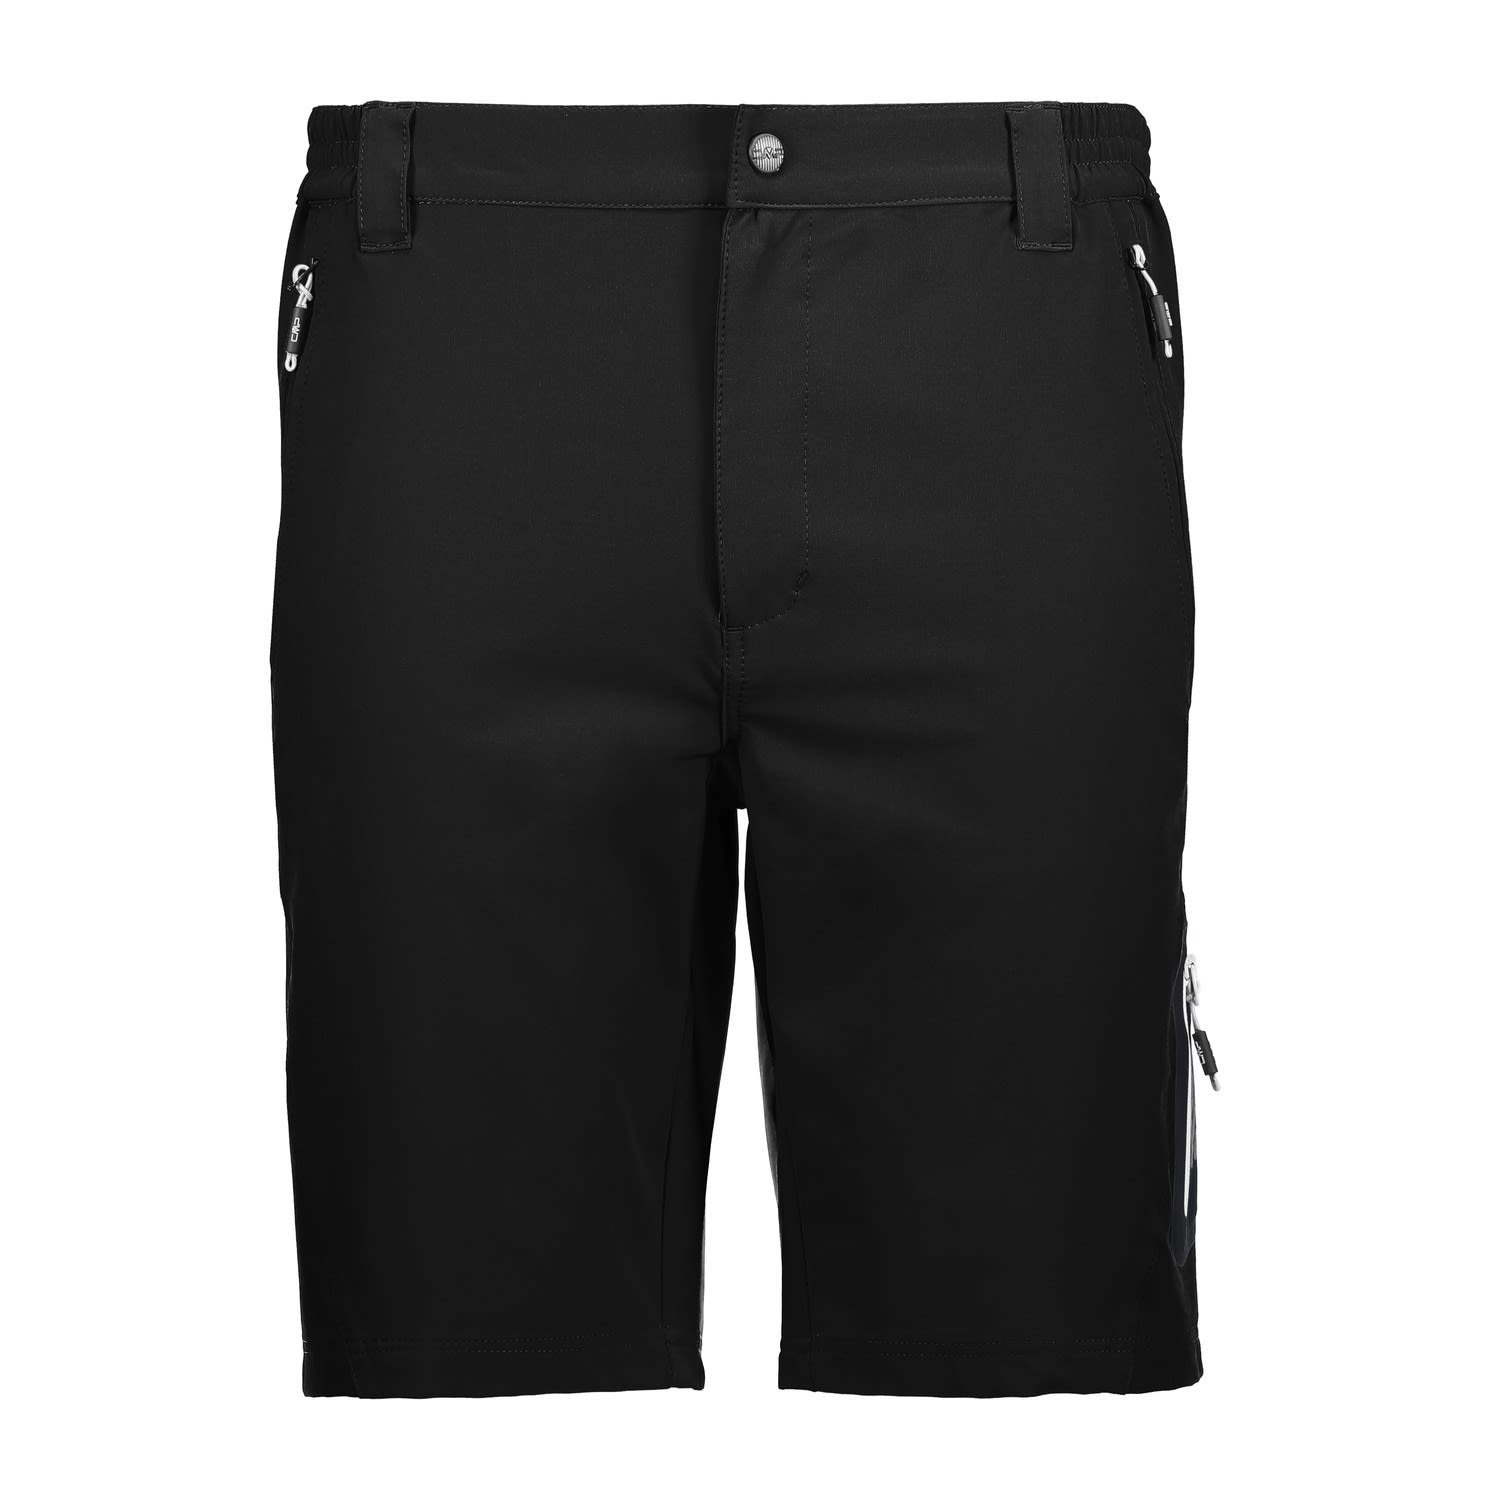 CMP Bermuda Schwarz- Male Shorts- Grsse 46 - Farbe Nero unter CMP